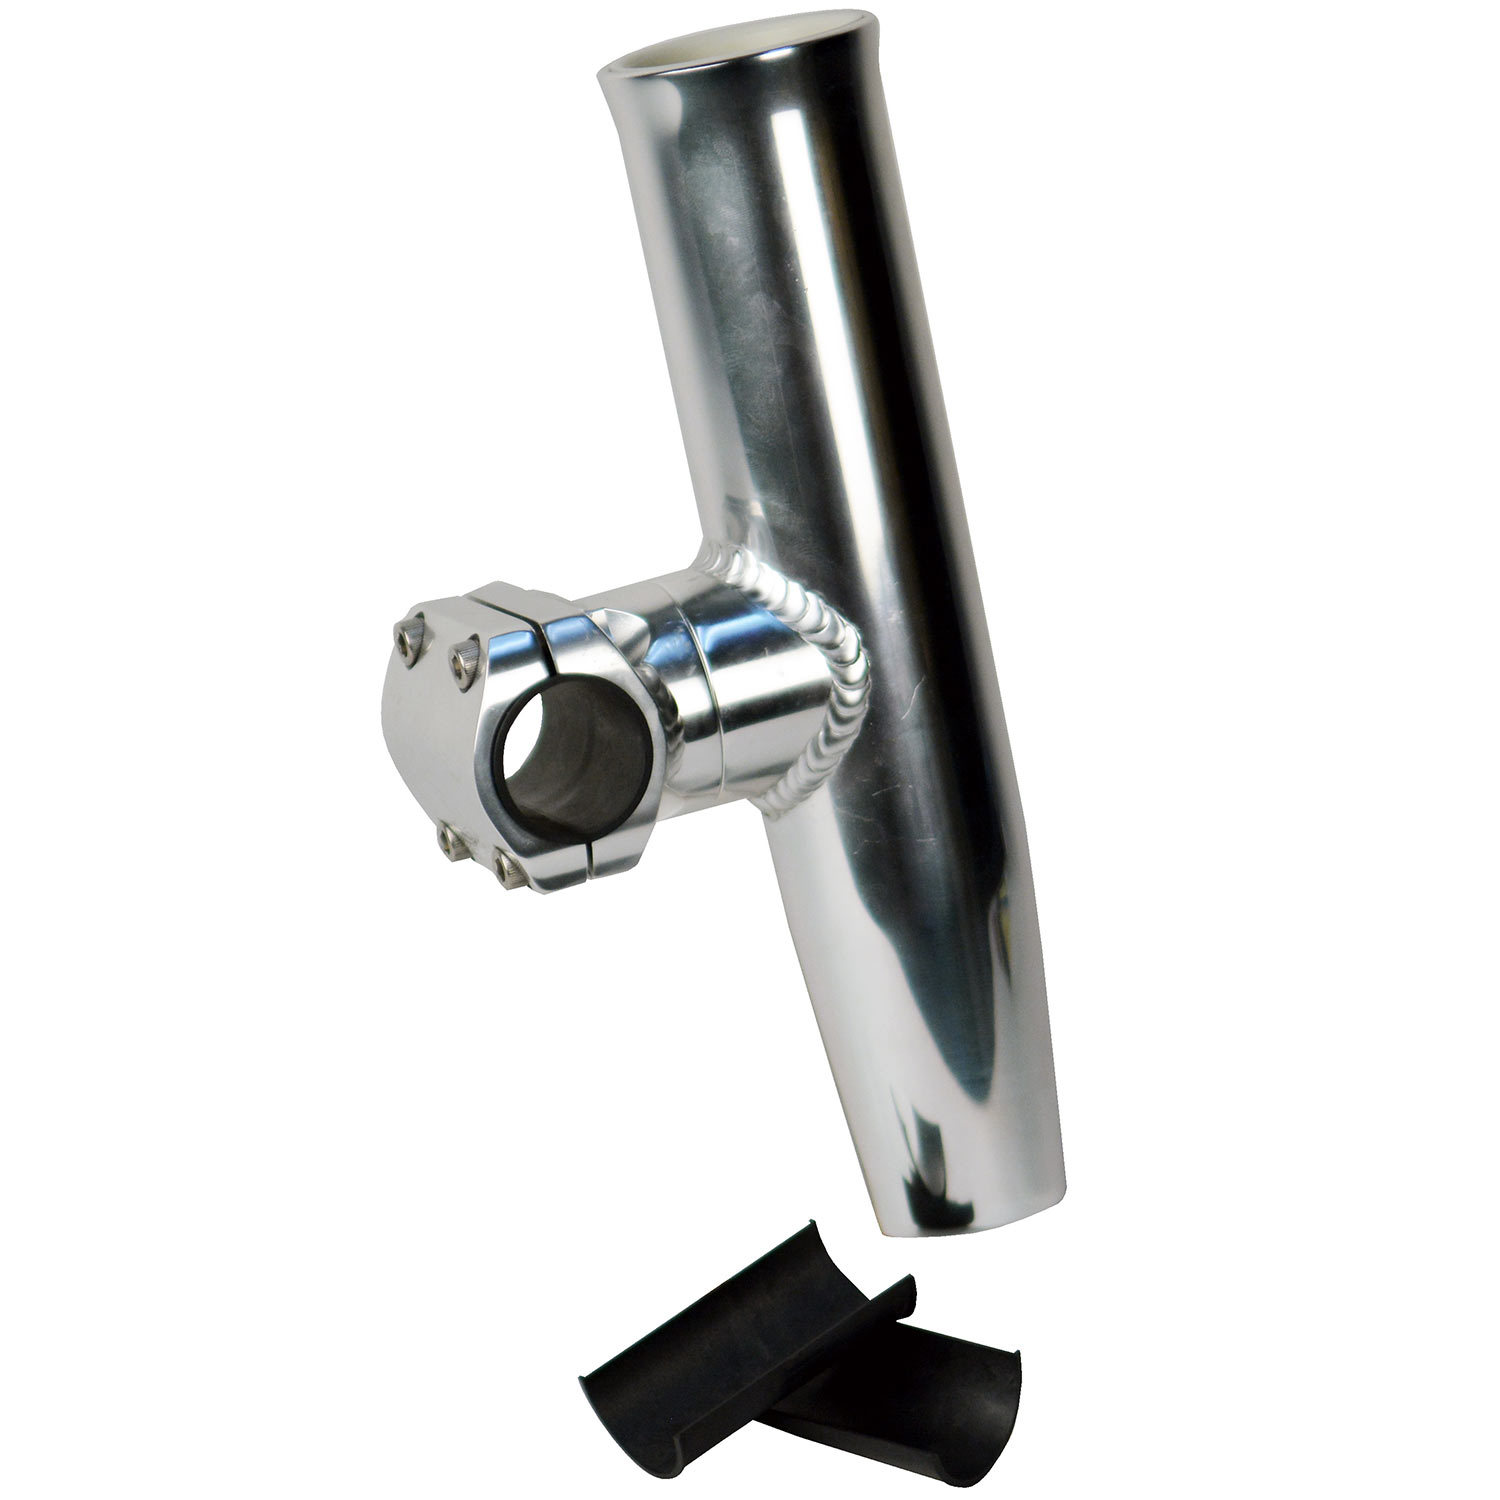 C E SMITH Aluminum Adjustable Rod Holder, Fits 7/8, 1, or 1-1/16